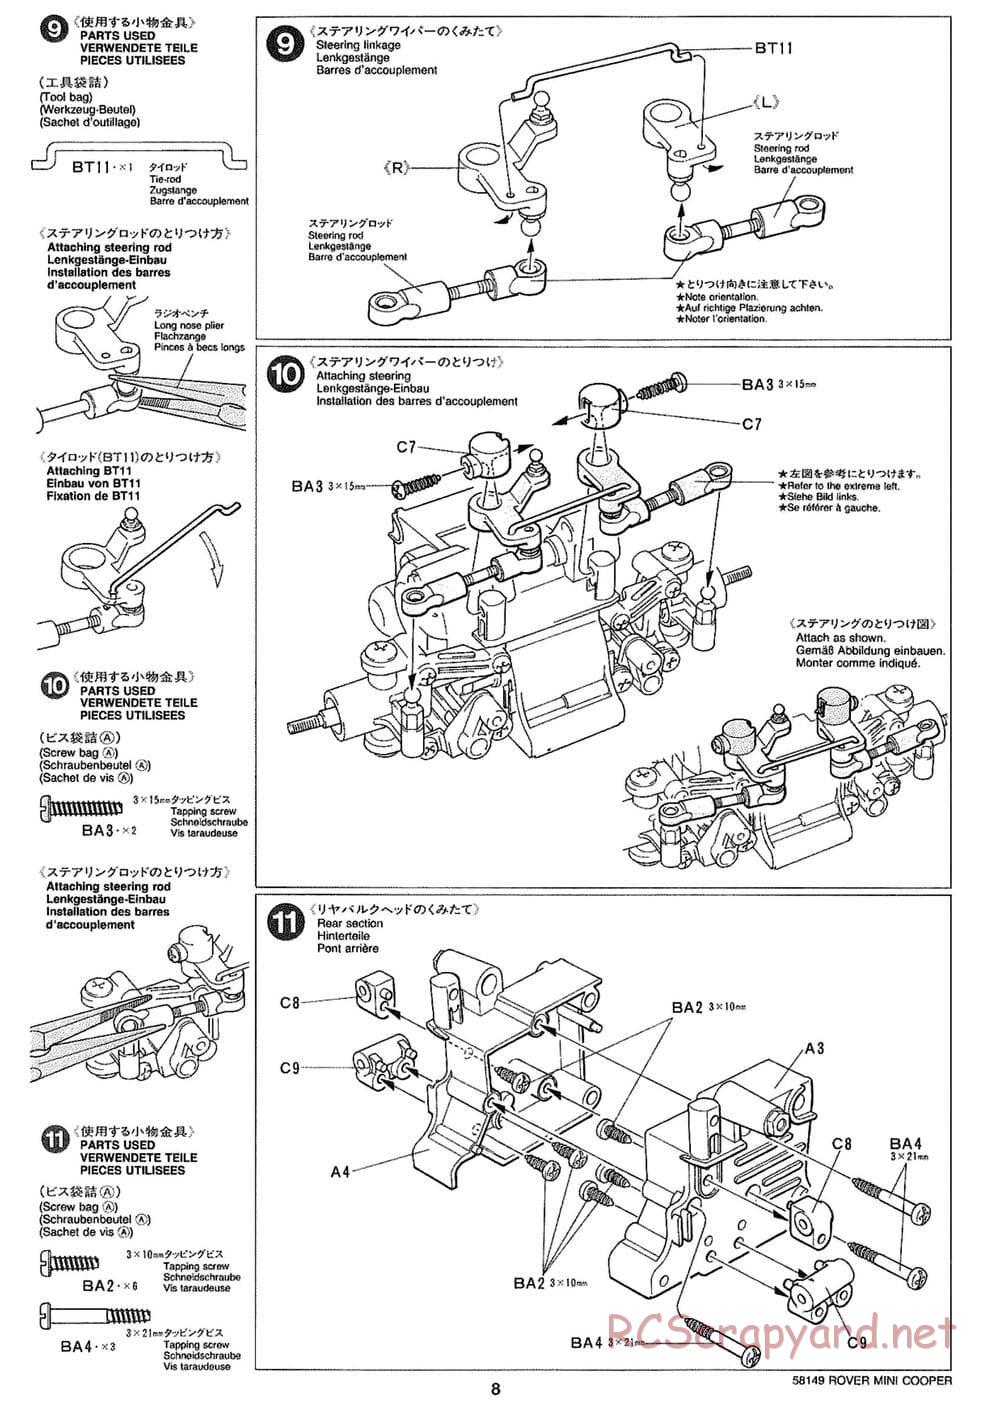 Tamiya - Rover Mini Cooper - M01 Chassis - Manual - Page 8